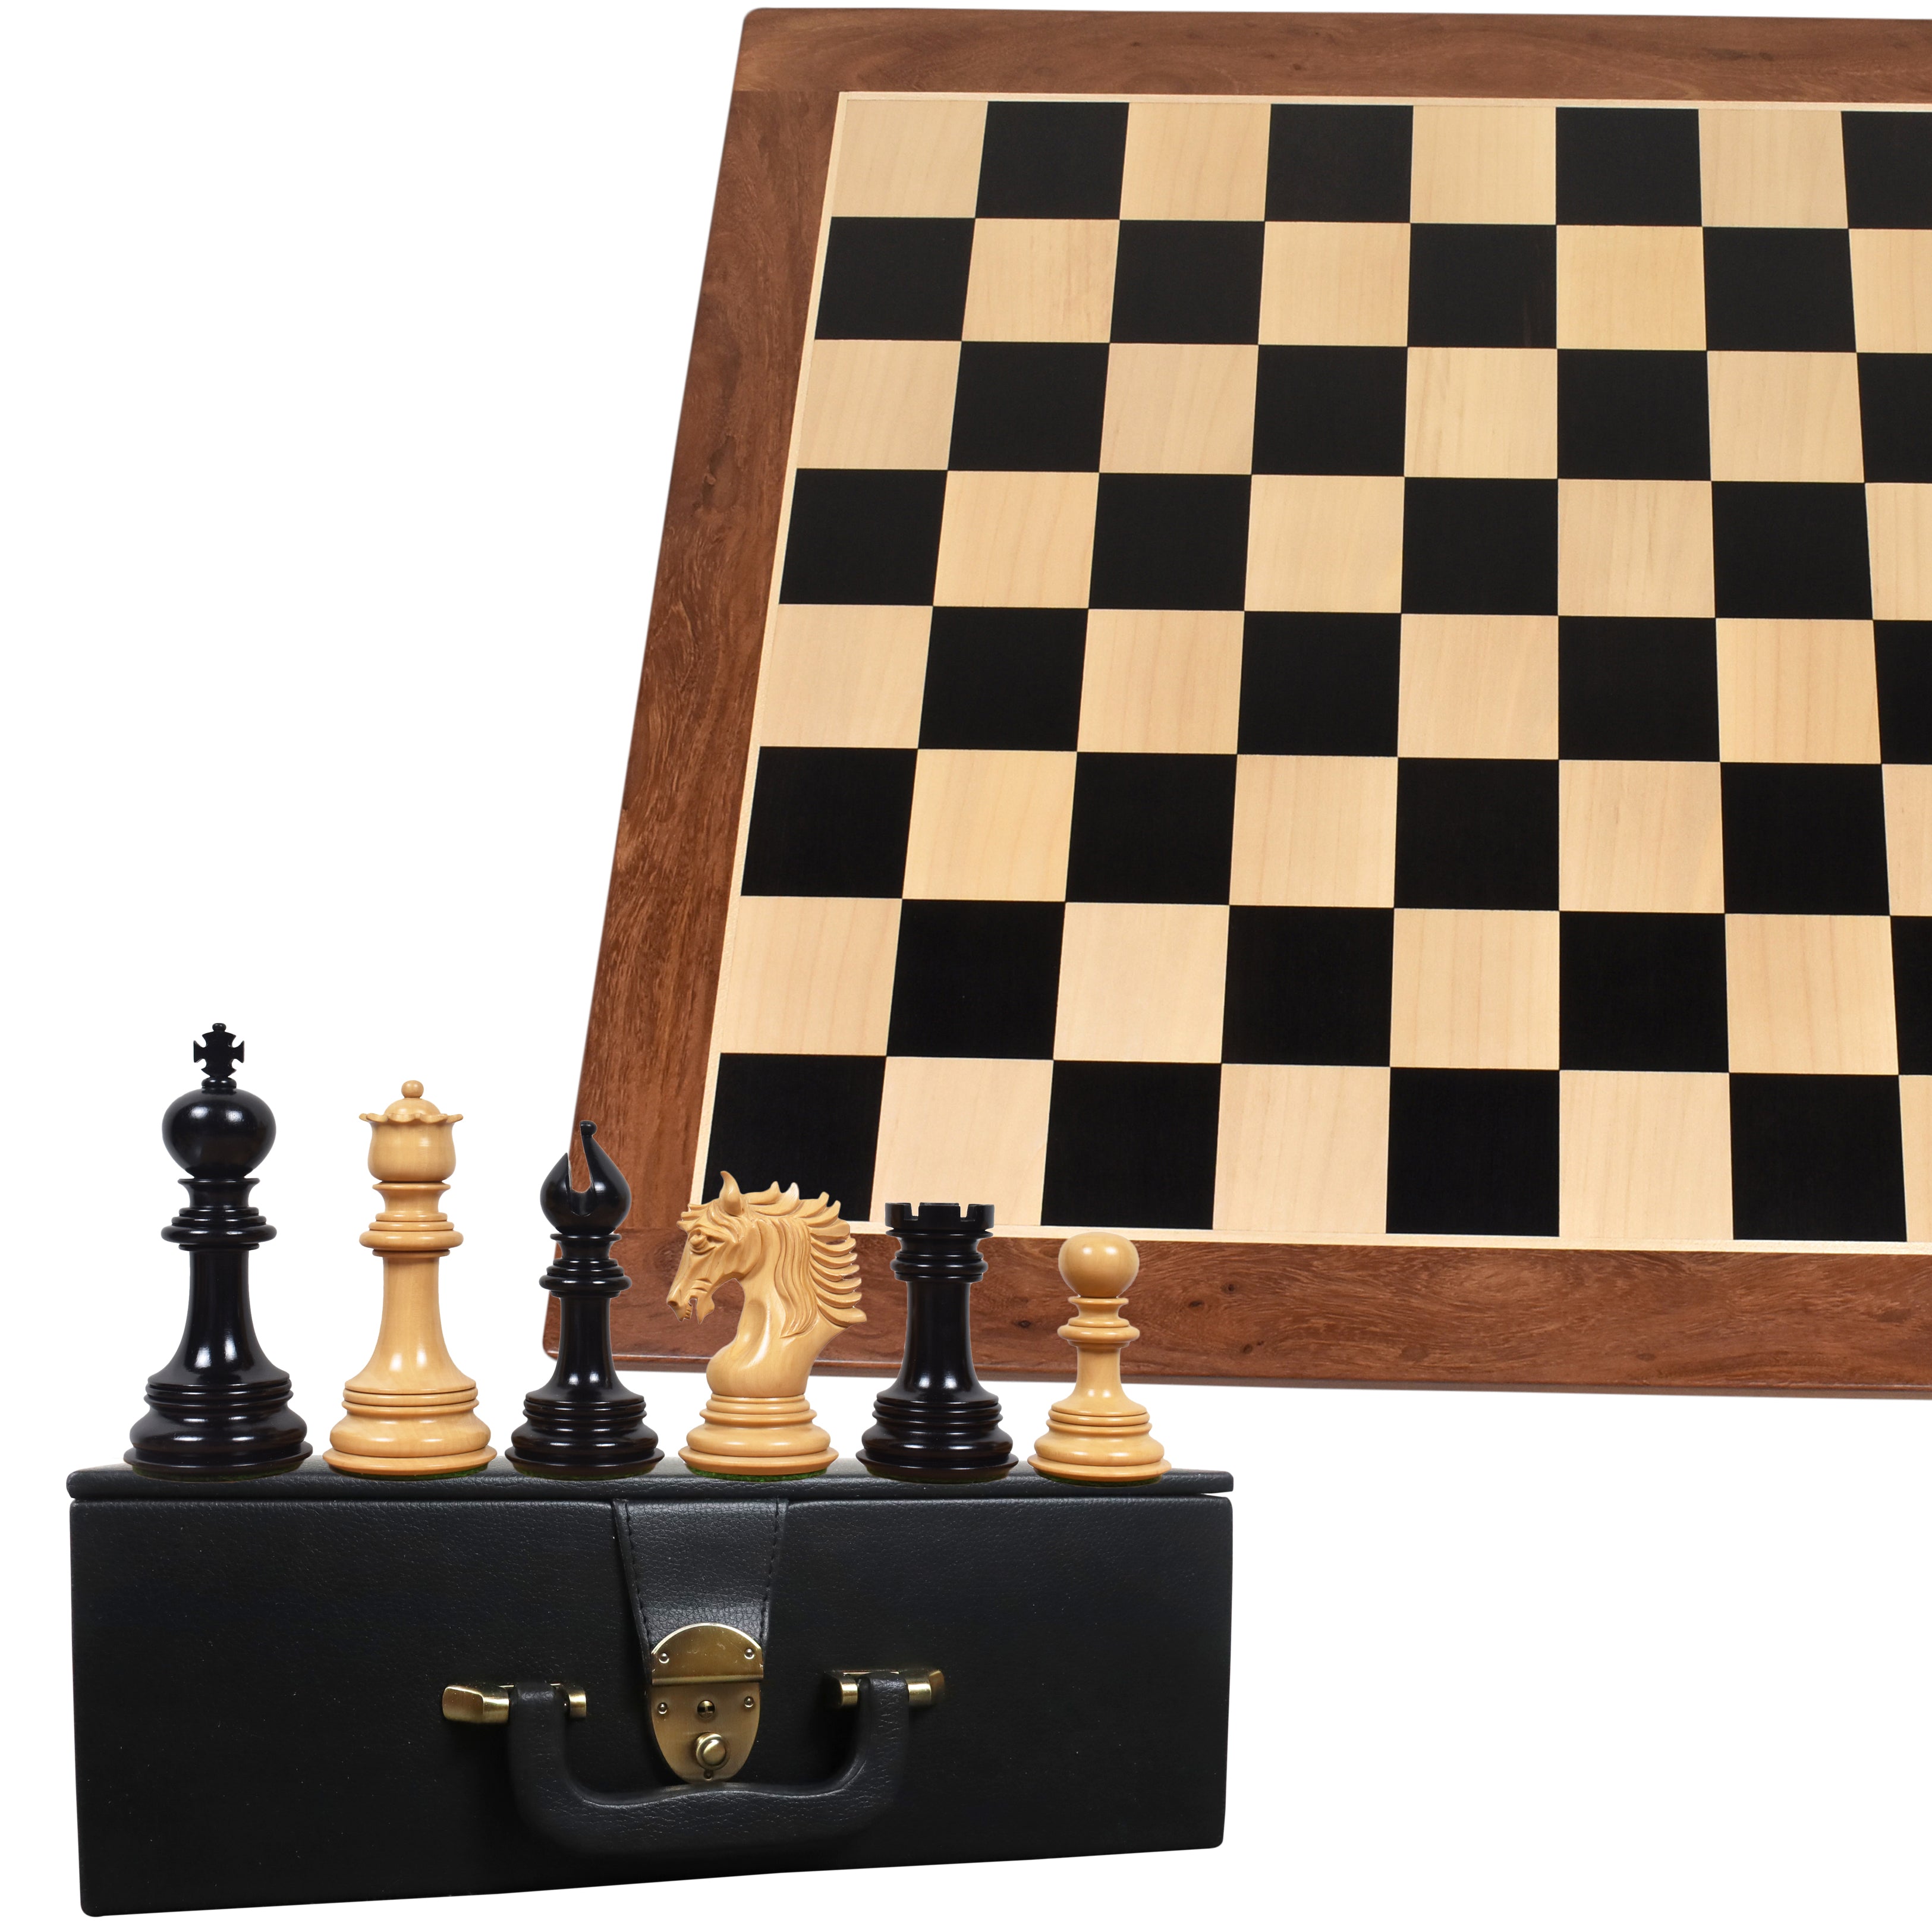 18 Large Black & White Marble Chess Set w/ Green Border